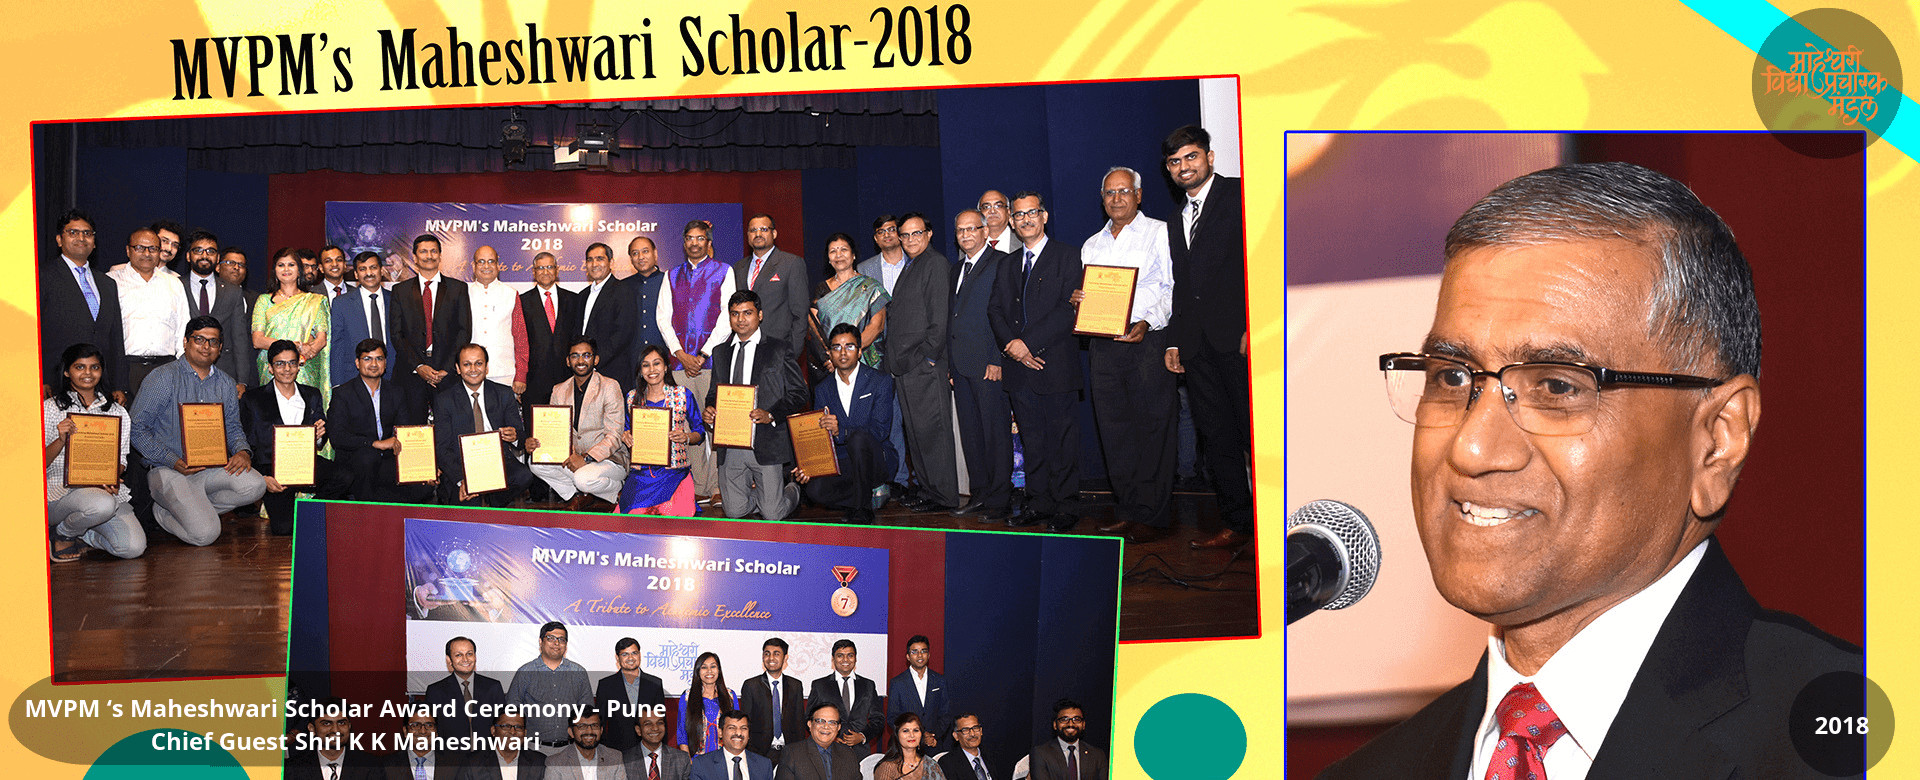 7.	MVPM ‘s Maheshwari Scholar Award Ceremony - Pune Chief Guest Shri K K Maheshwari 2018